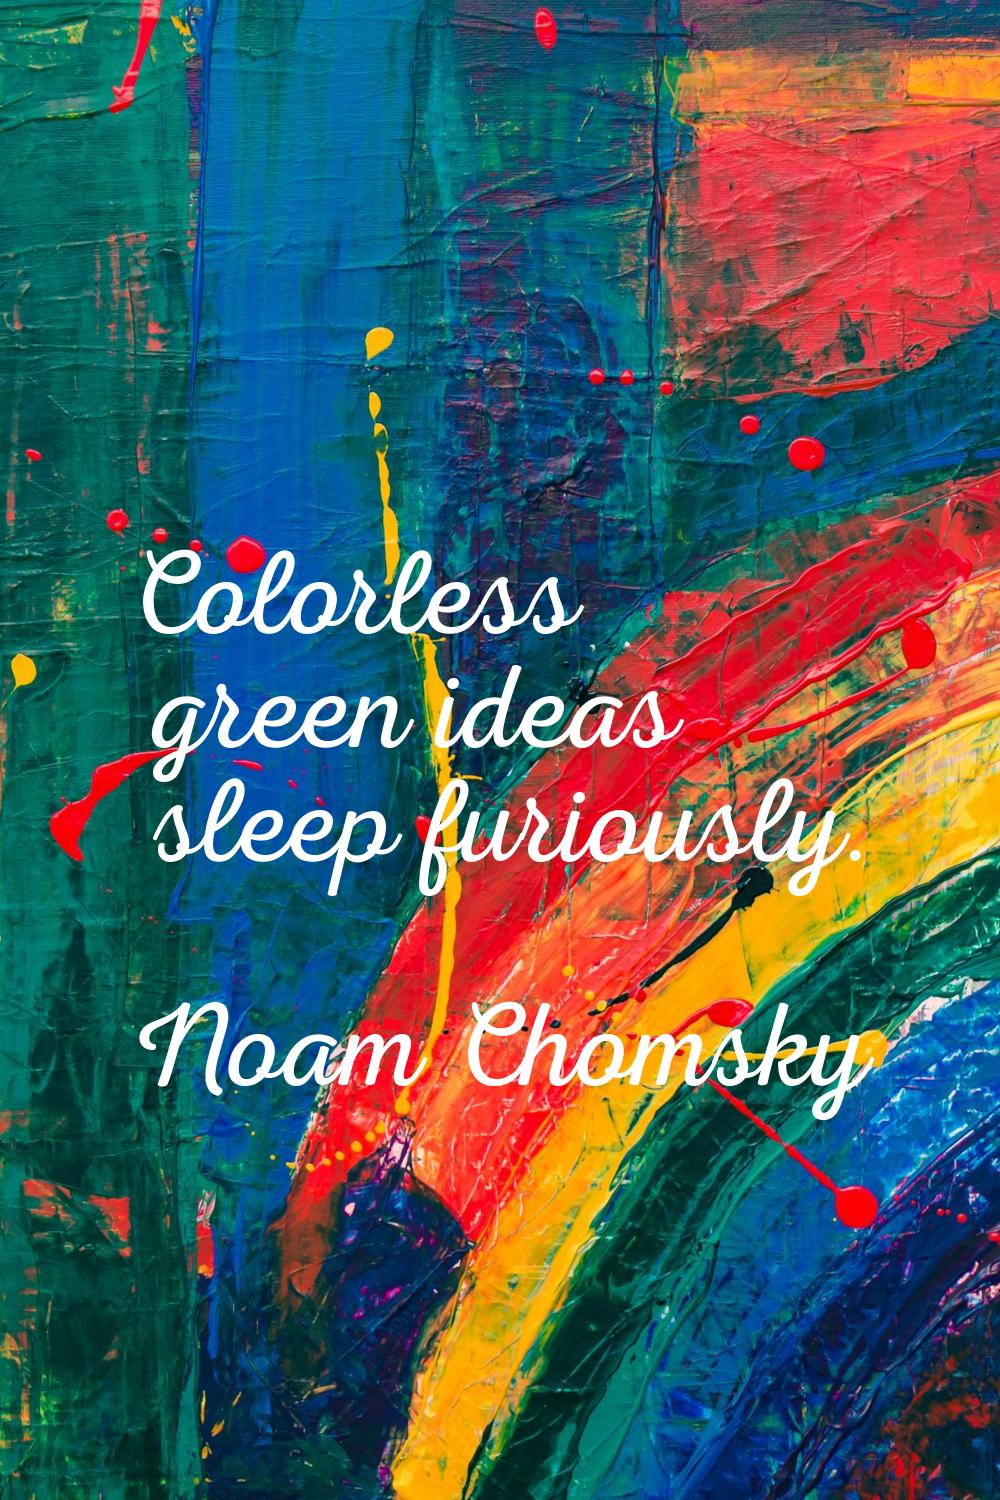 Colorless green ideas sleep furiously.